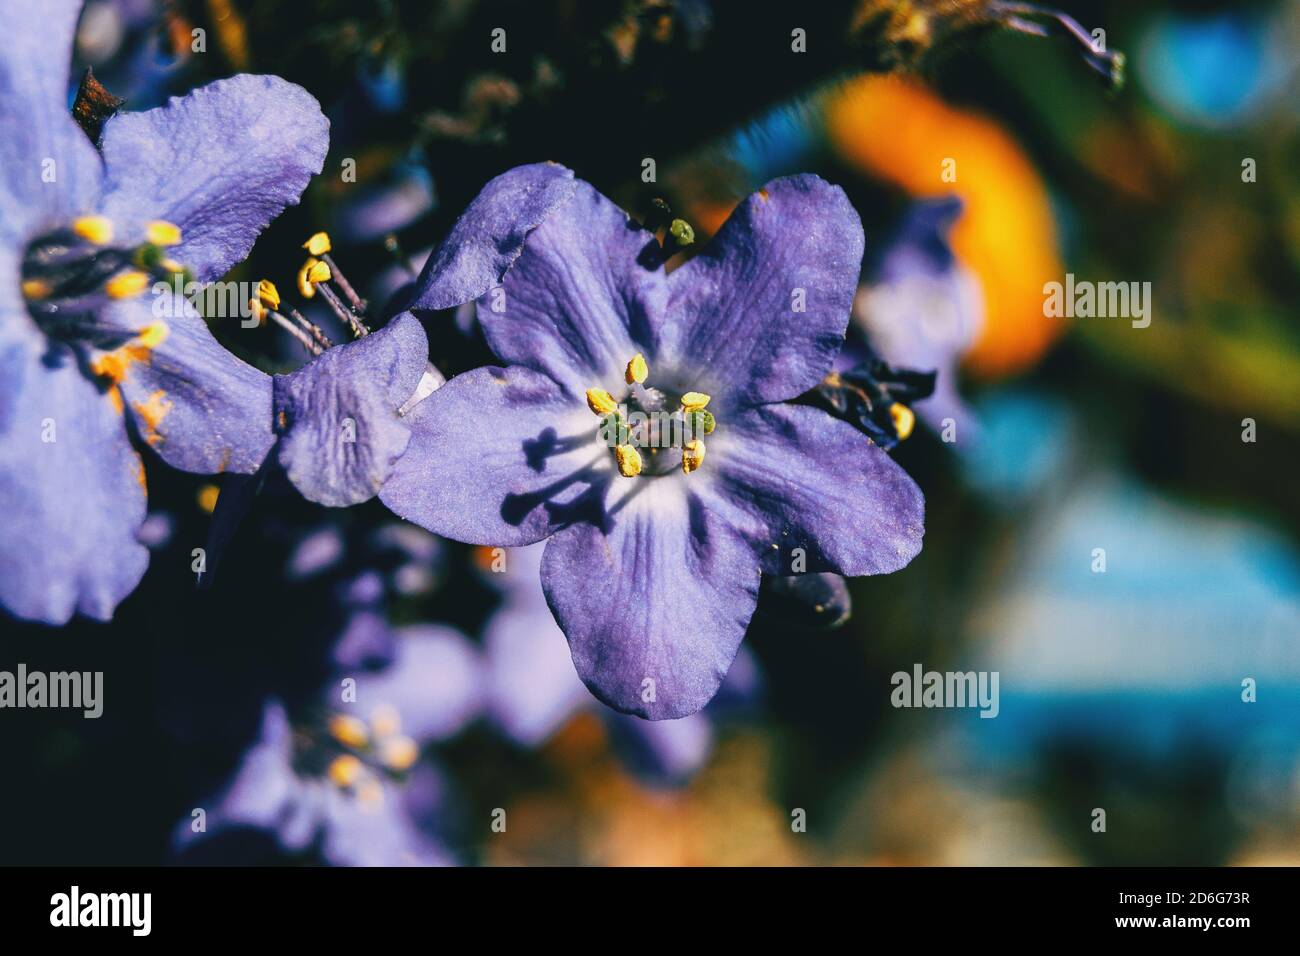 Detail of a purple flower of polemonium caeruleum illuminated by sunlight Stock Photo